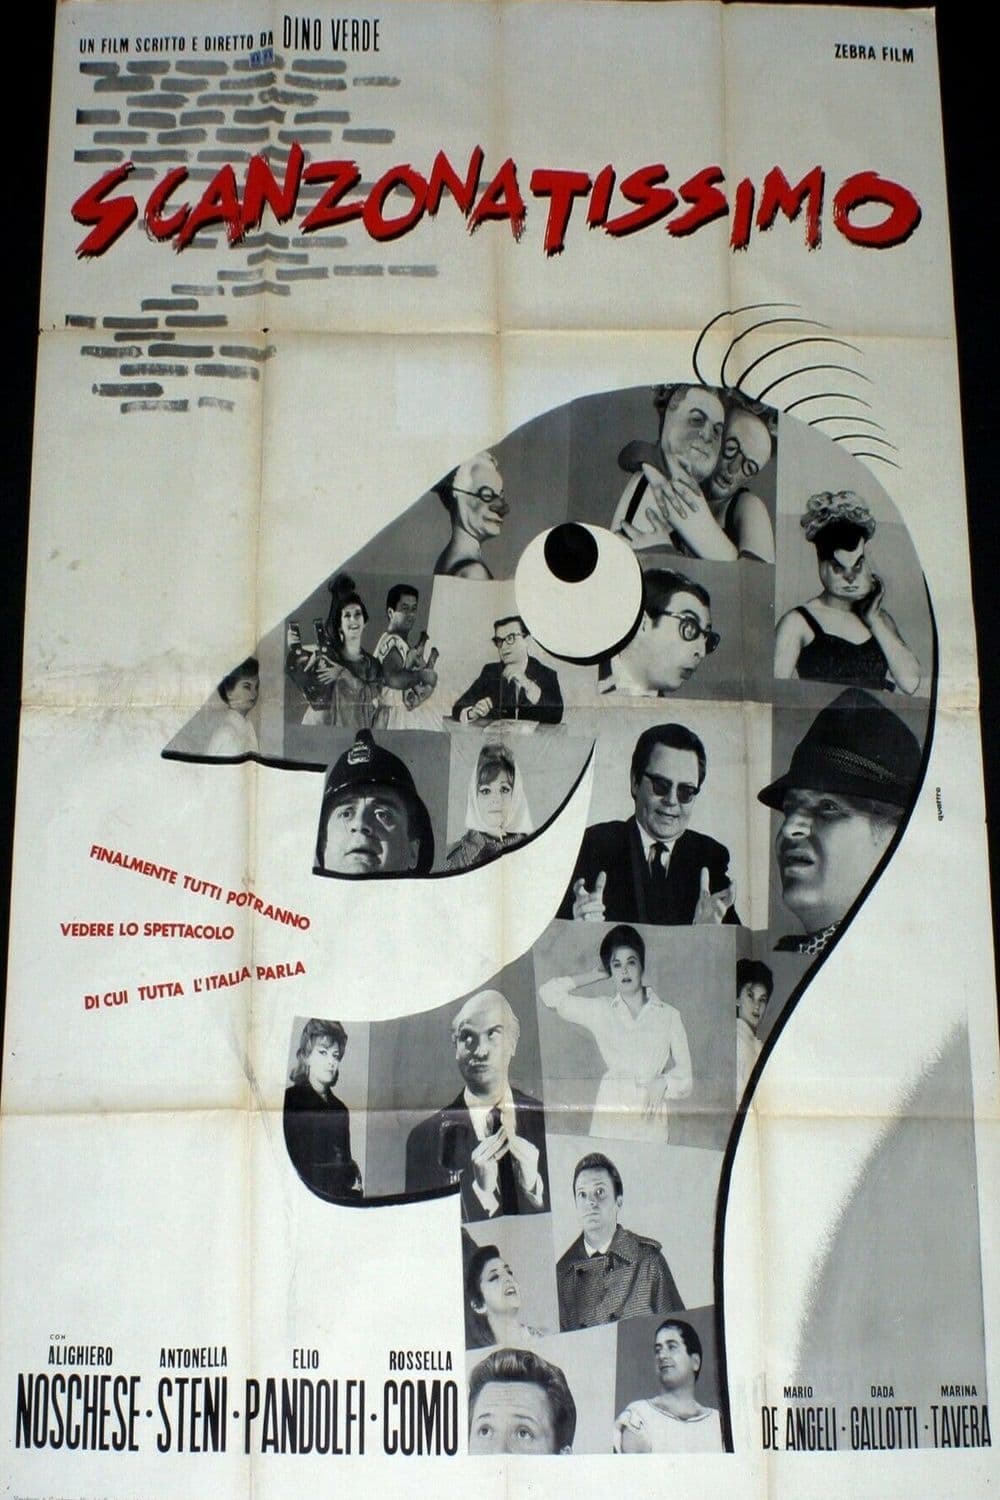 Scanzonatissimo (1963)